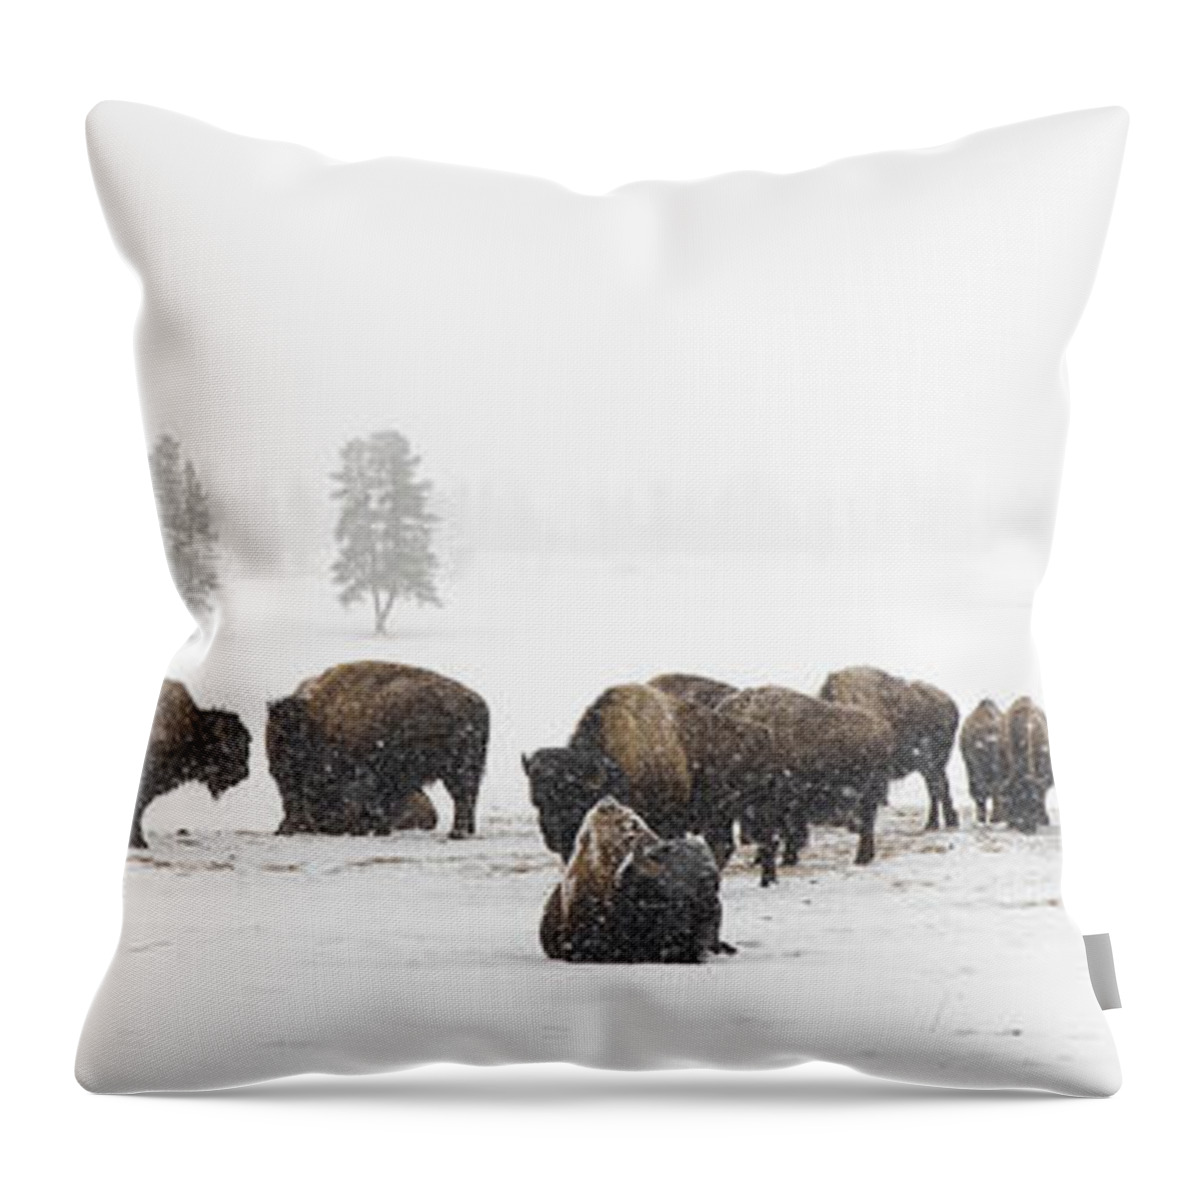 Yellowstone Throw Pillow featuring the photograph Buffalo Herd in Snow by Bill Cubitt